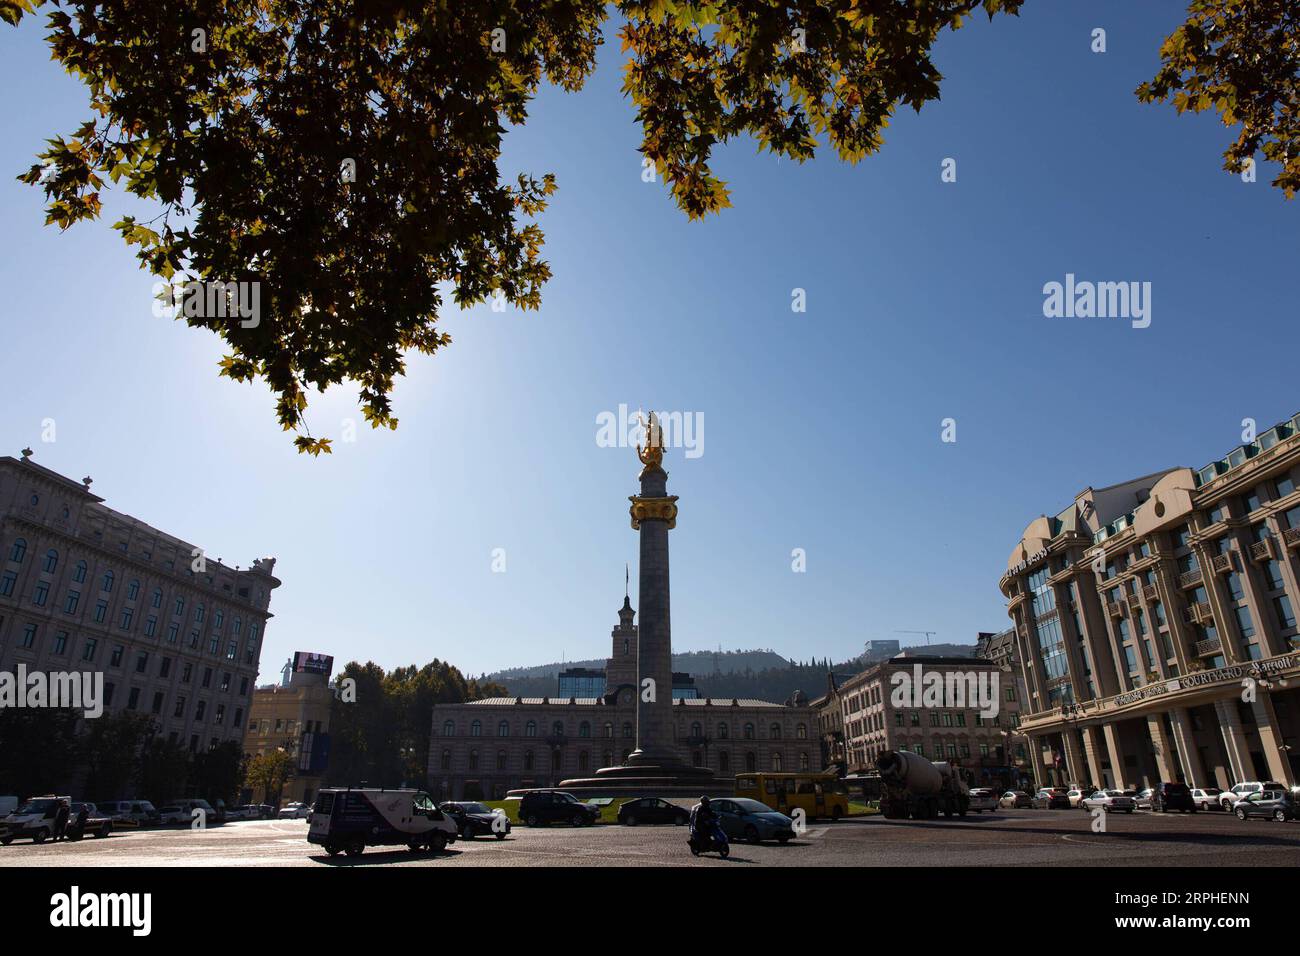 191106 -- TBILISI, Nov. 6, 2019 -- Photo taken on Nov. 6, 2019 shows the Freedom Square in Tbilisi, capital of Geogria.  GEORGIA-TBILISI-SCENERY BaixXueqi PUBLICATIONxNOTxINxCHN Stock Photo